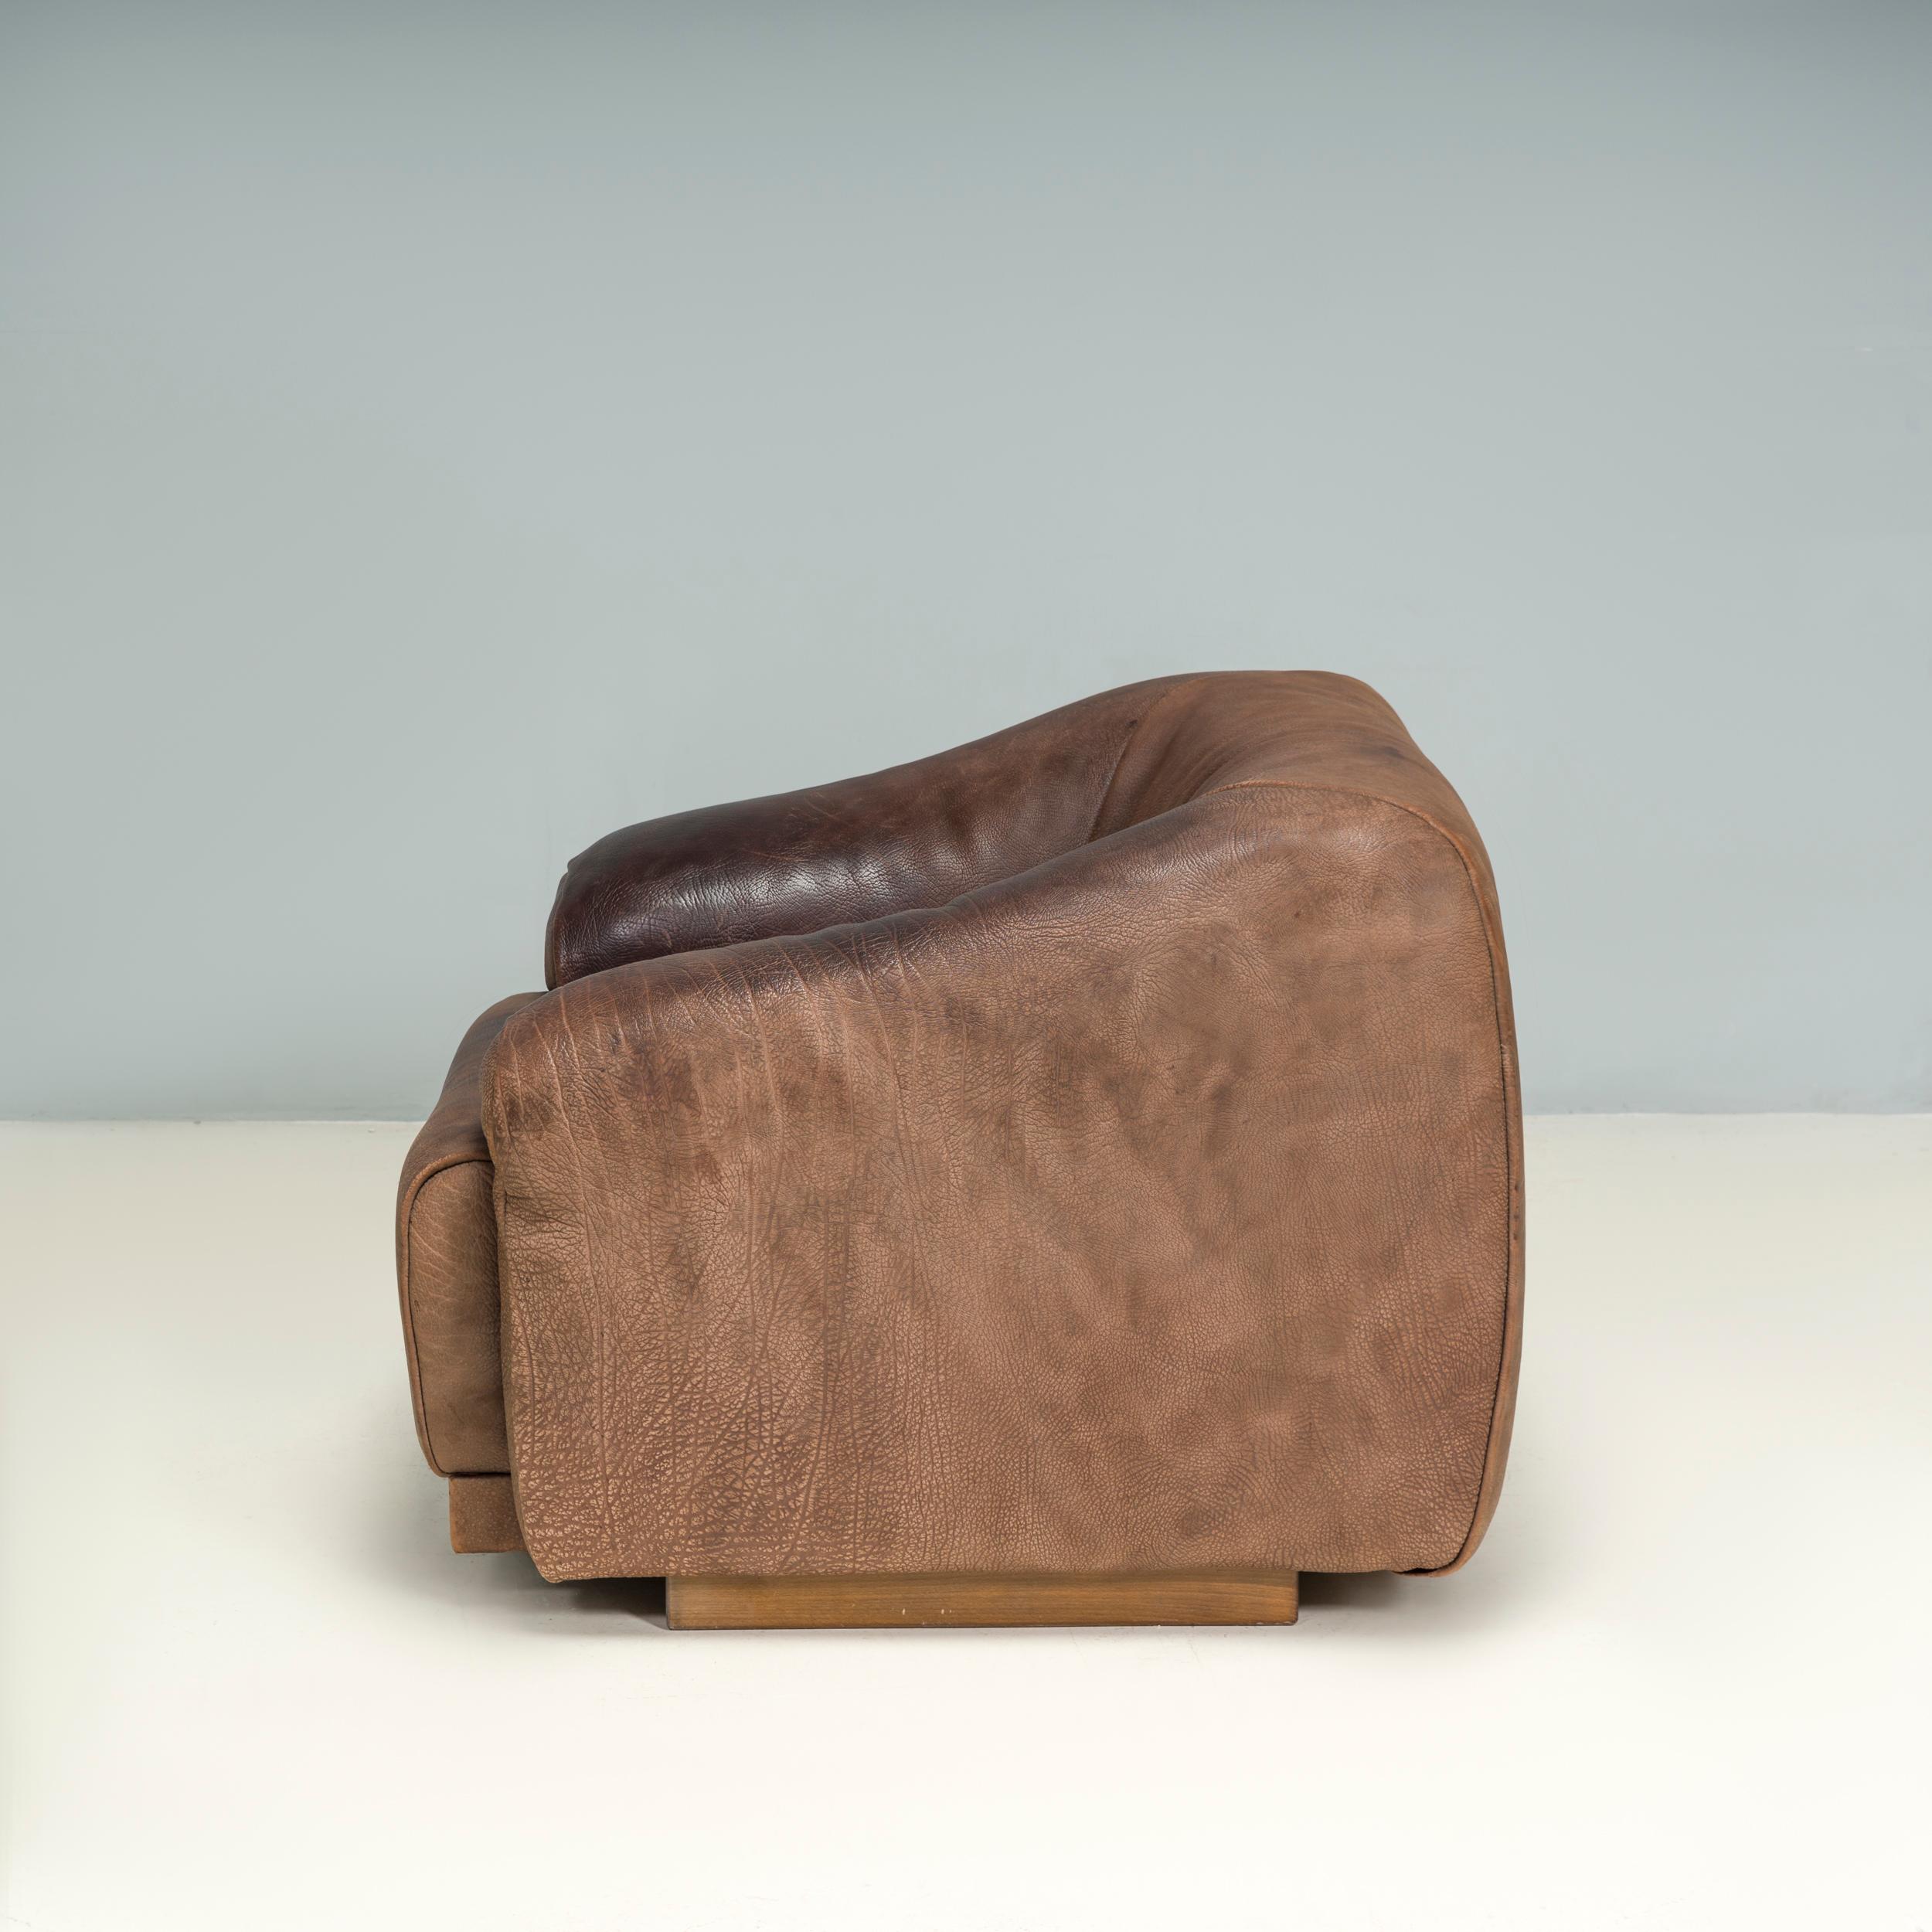 Swiss De Sede Brown Buffalo Leather Armchair, 1970s For Sale